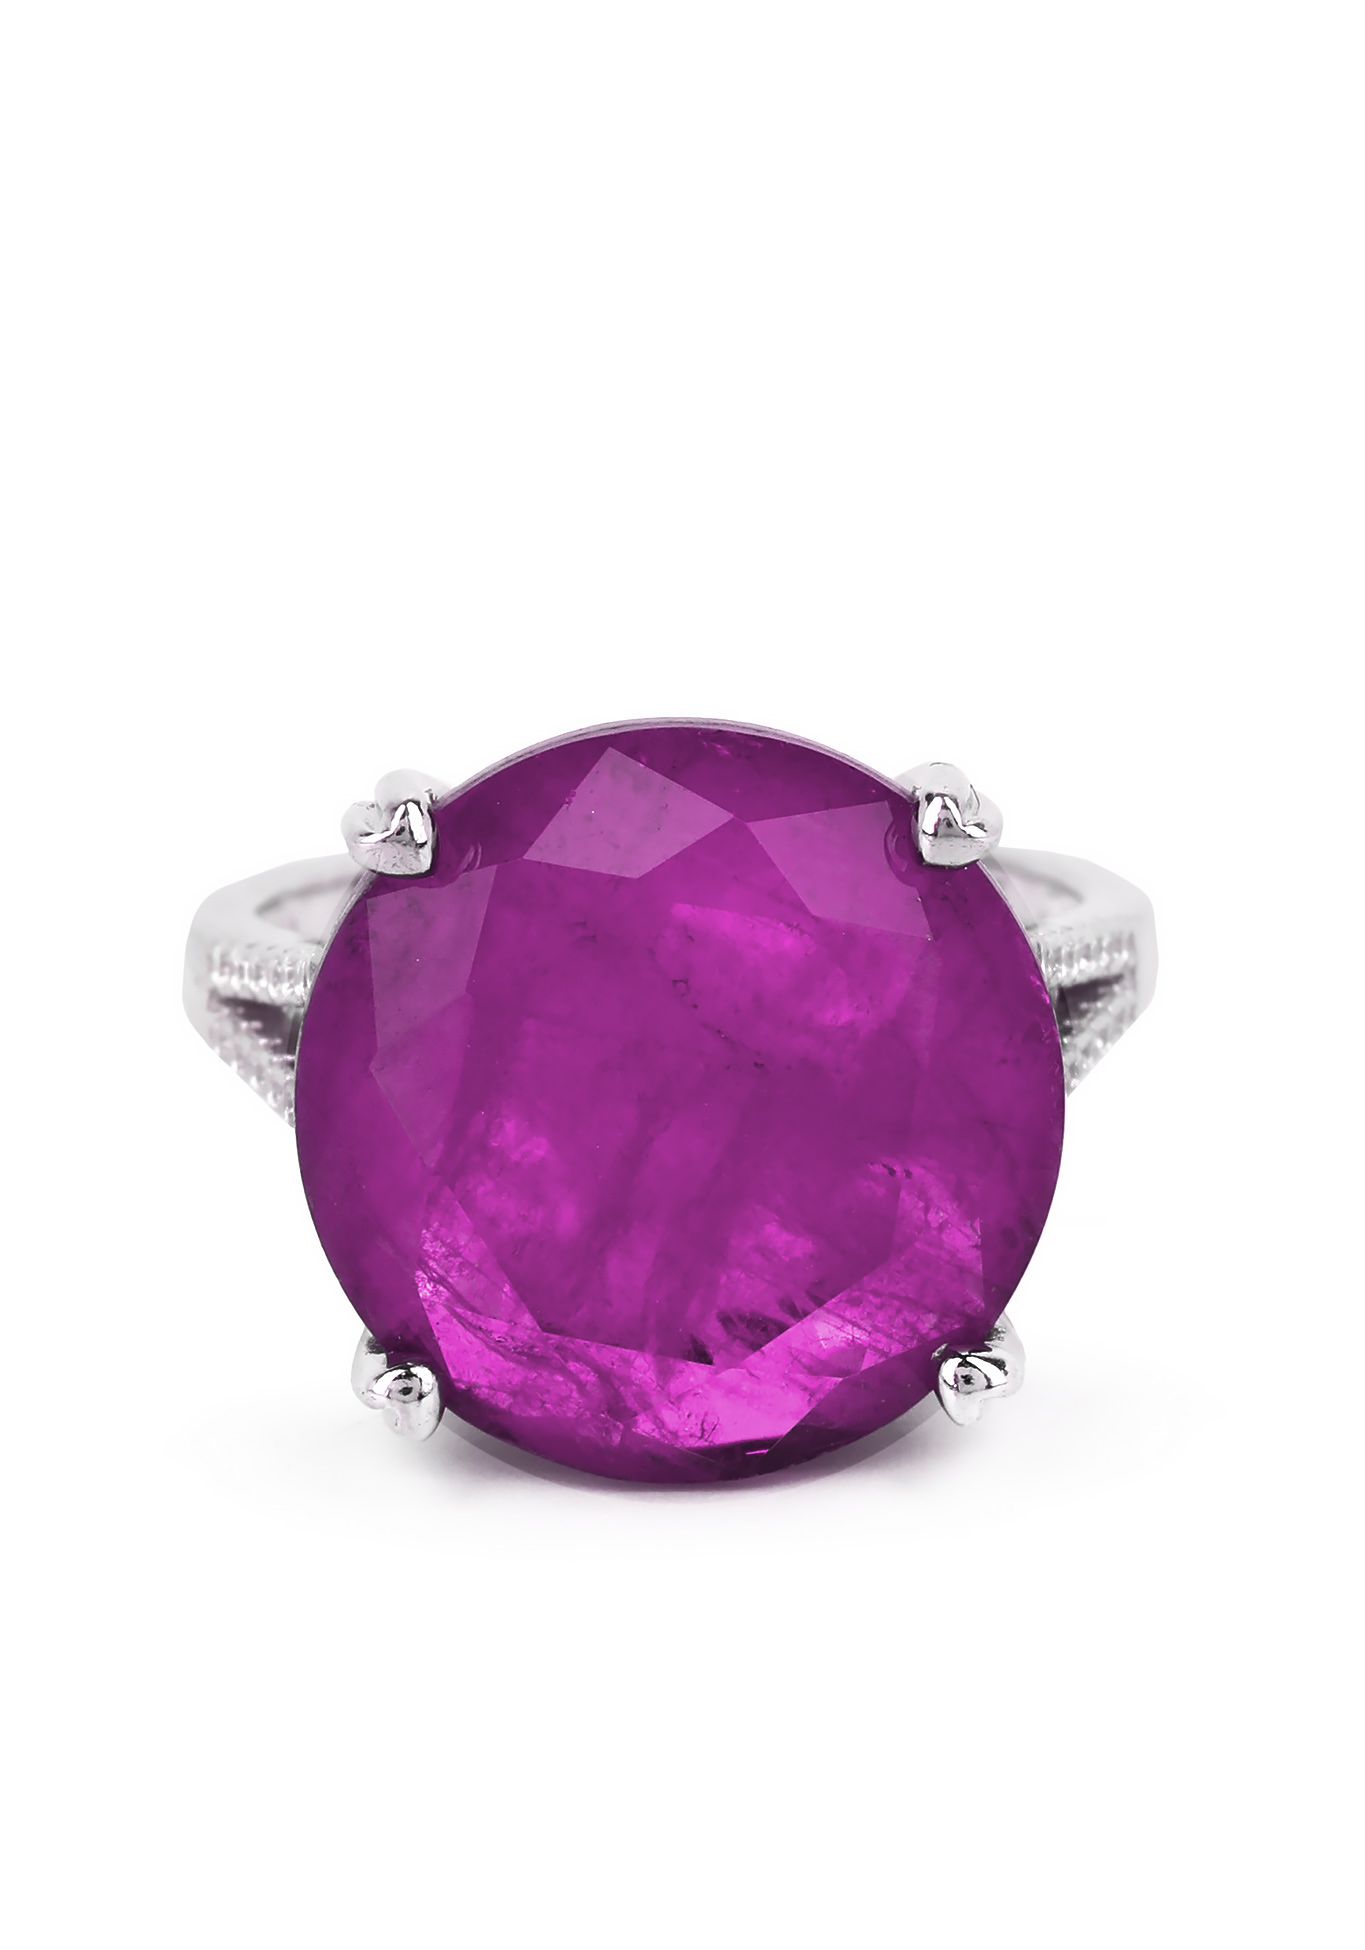 Кольцо серебряное "Леди" Fresh Jewelry, размер 19, цвет сиреневый солитер, сплит шенк - фото 2